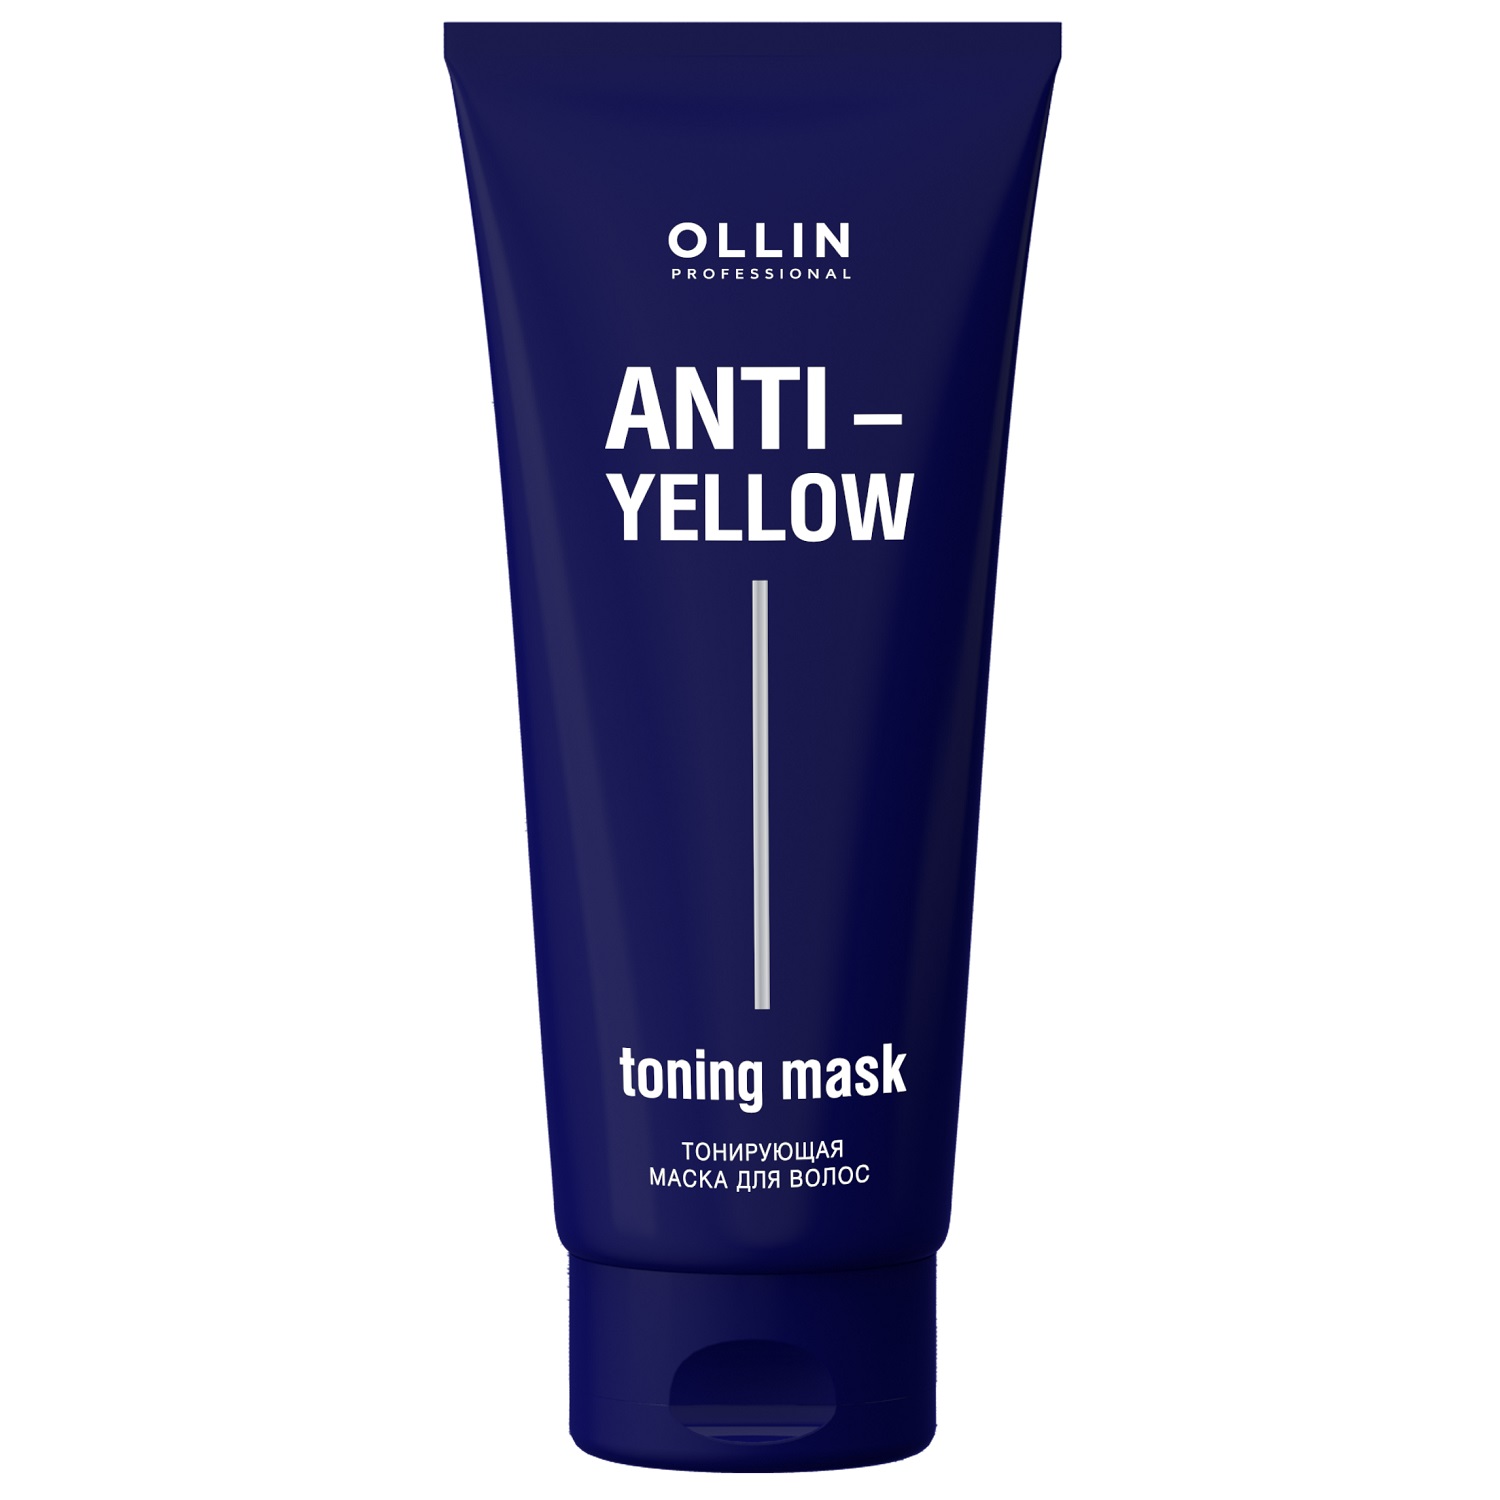 Ollin Professional Тонирующая маска для волос Toning Mask, 250 мл (Ollin Professional, Anti-Yellow) ollin маска для волос ollin anti yellow тонирующая 250 мл